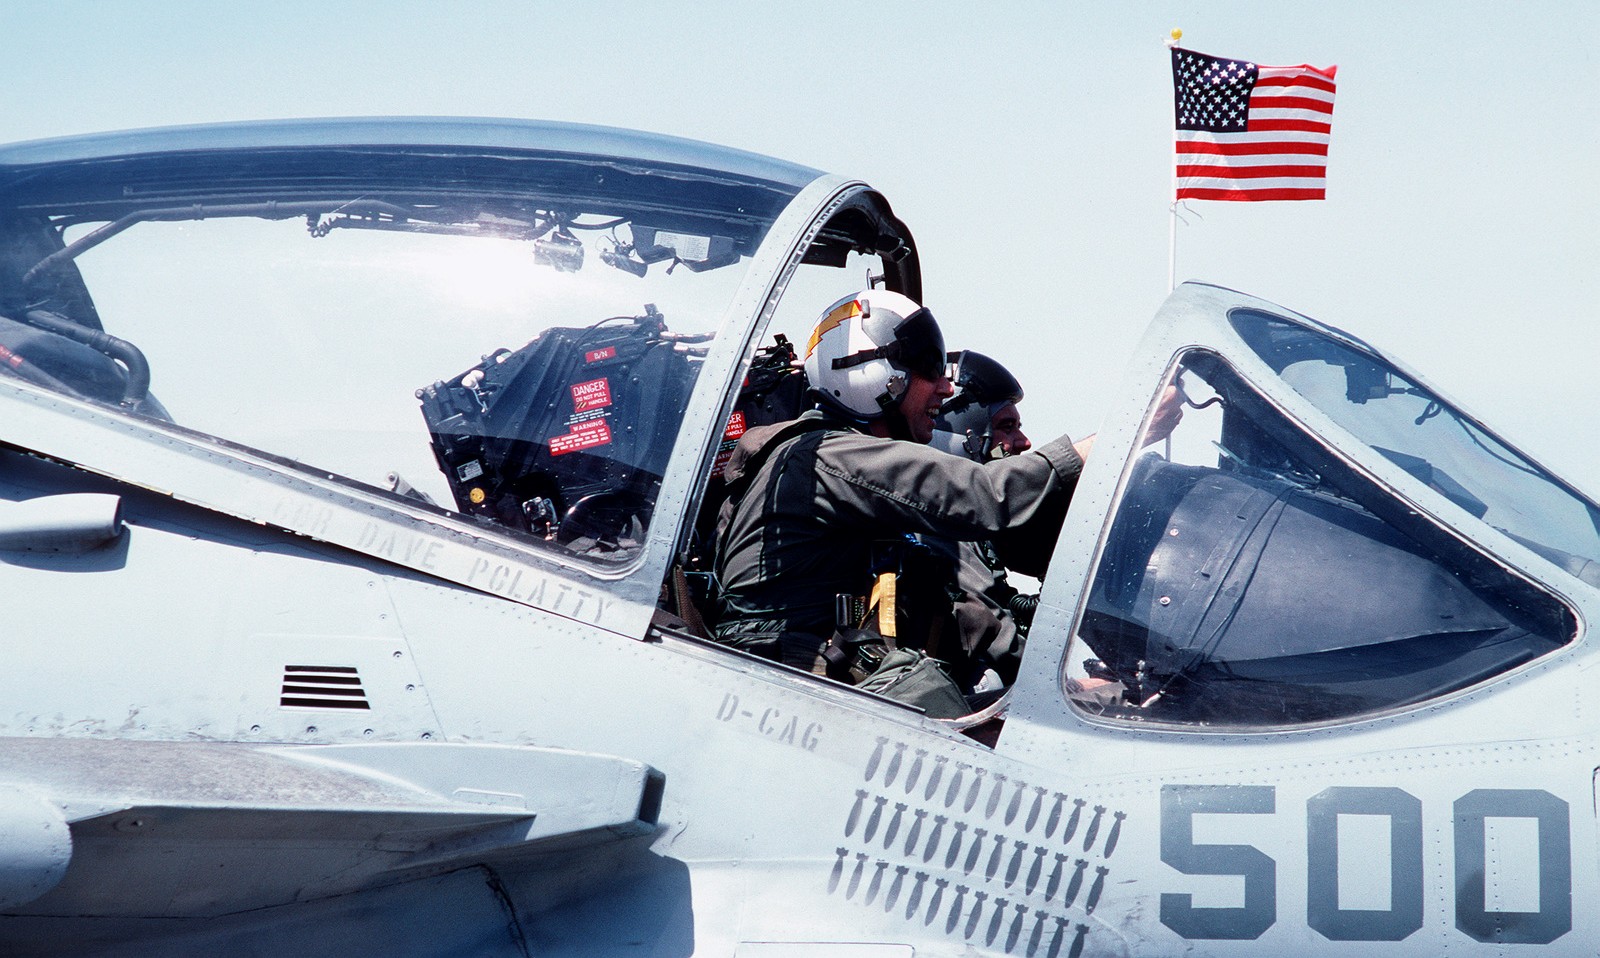 va-85 black falcons attack squadron us navy a-6e intruder carrier air wing cvw-1 uss america cv-66 34